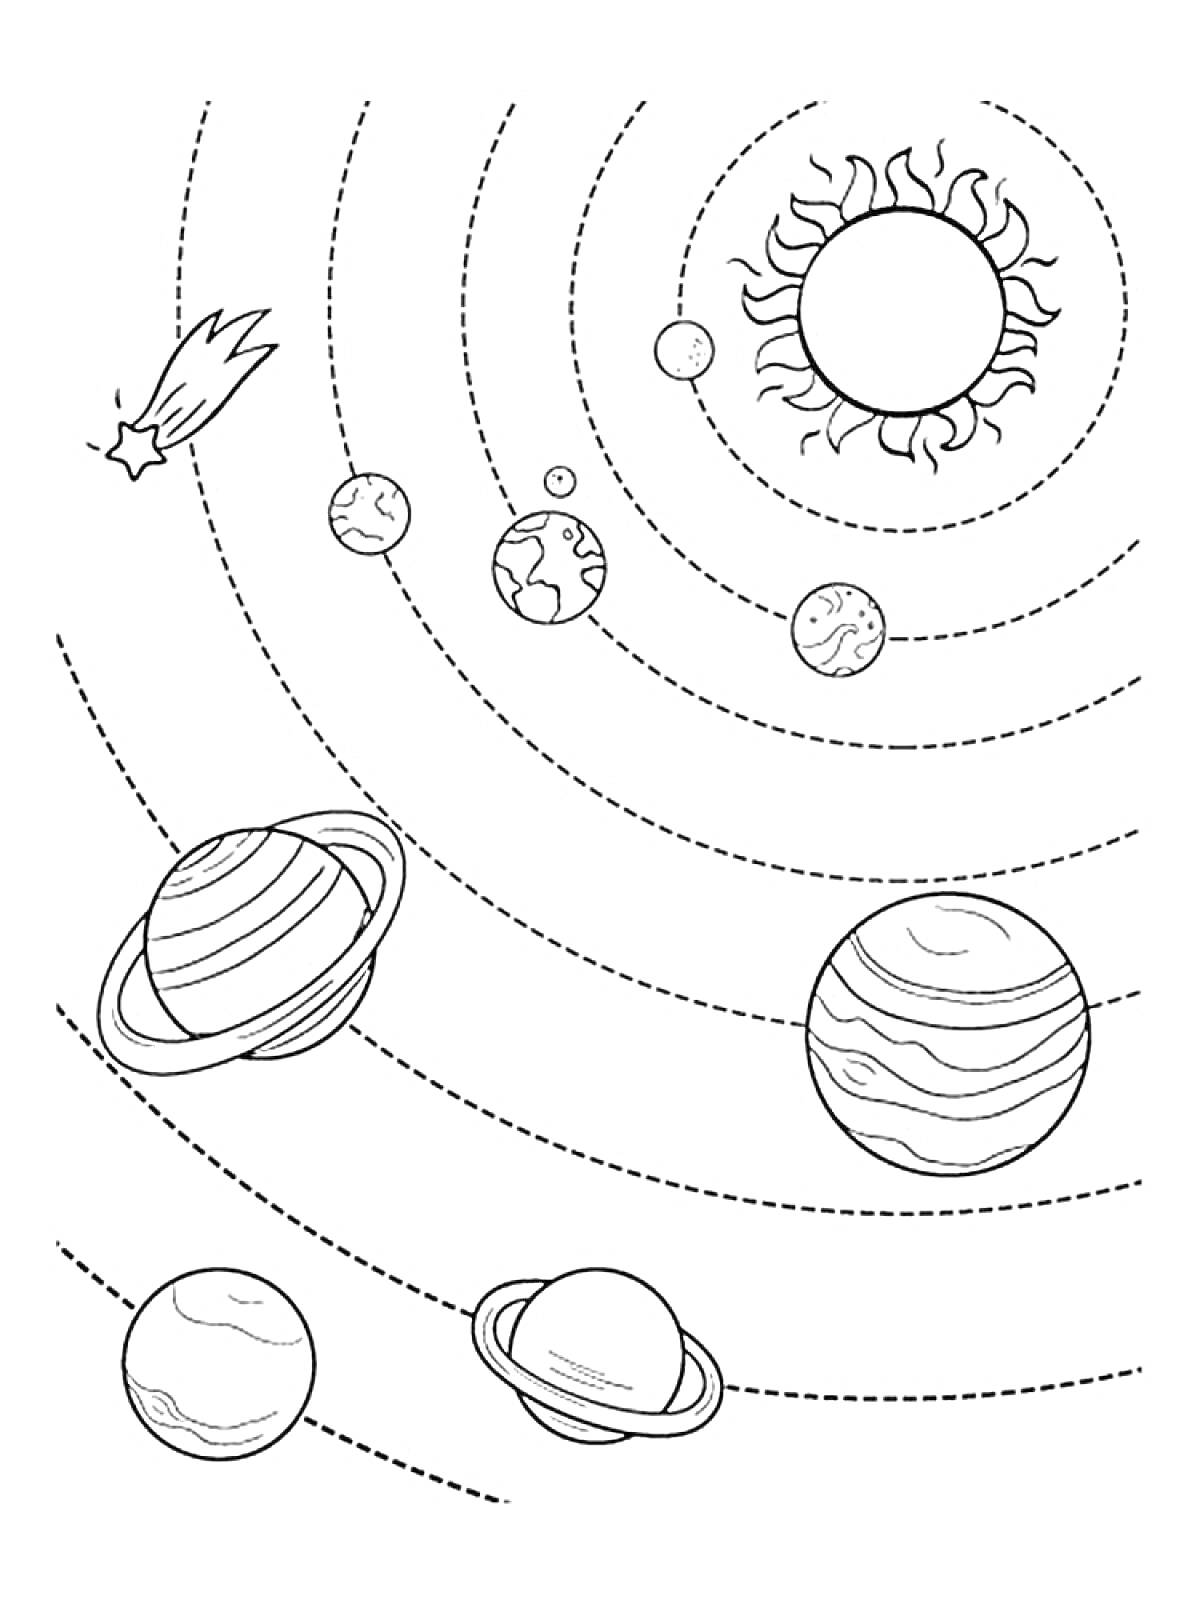 На раскраске изображено: Солнце, Планеты, Комета, Меркурий, Венера, Земля, Марс, Юпитер, Сатурн, Уран, Нептун, Космос, Астрономия, Орбиты